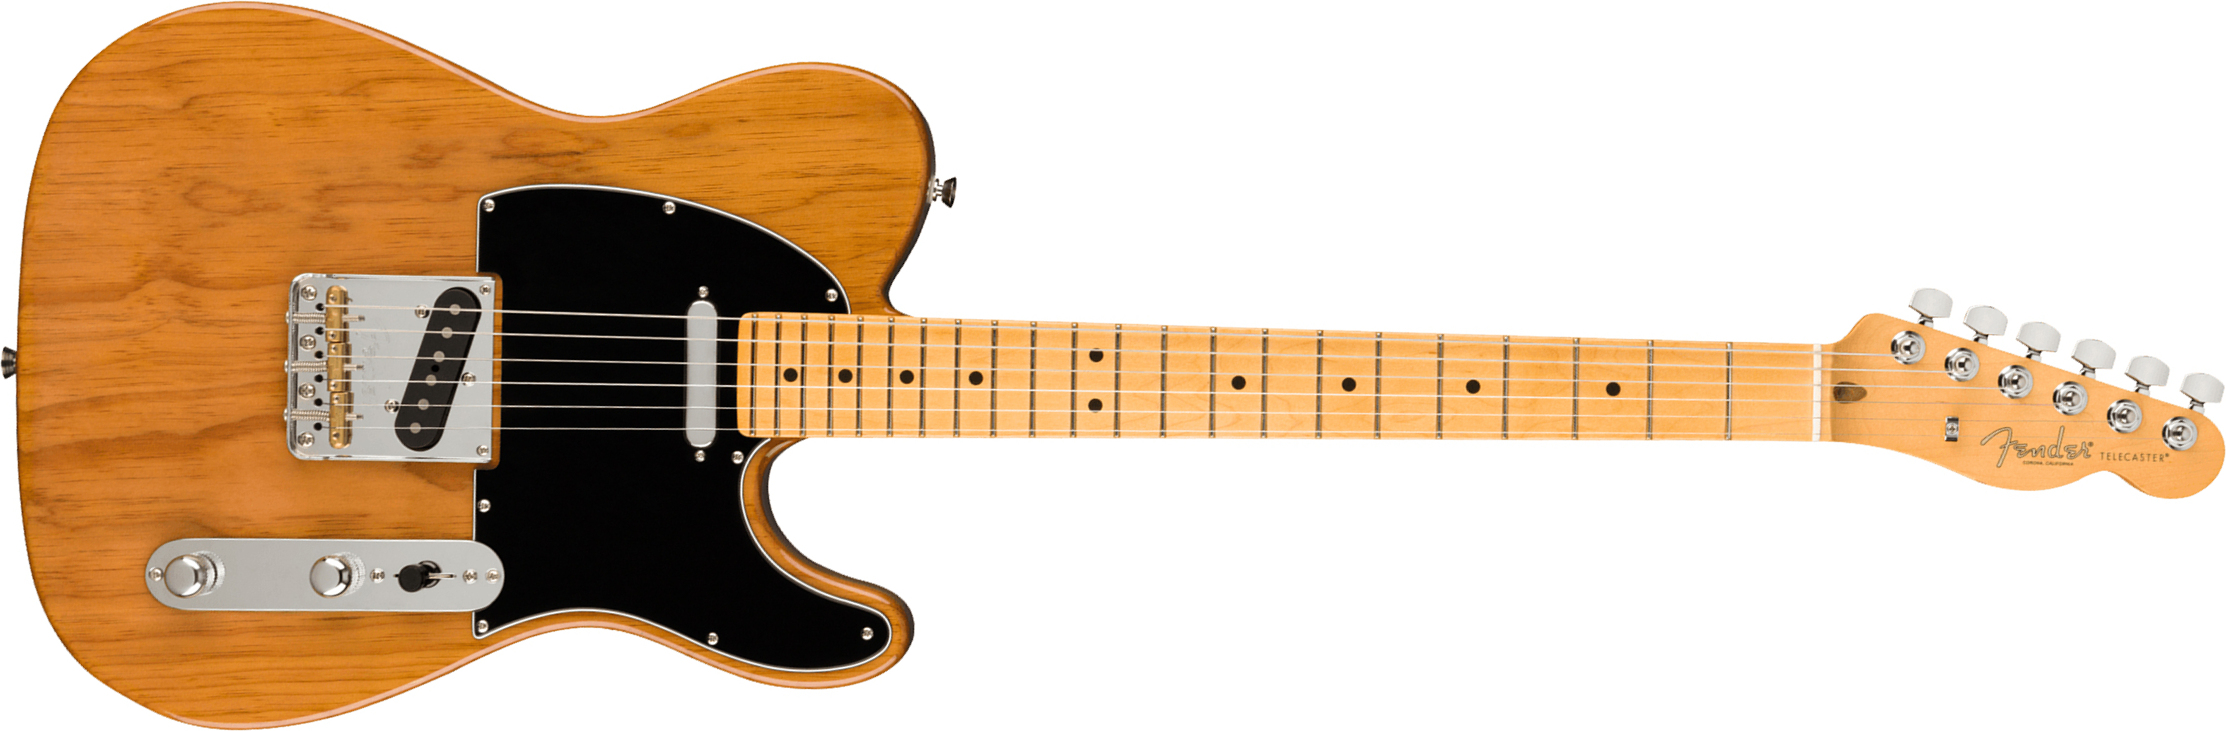 Fender Tele American Professional Ii Usa Mn - Roasted Pine - Televorm elektrische gitaar - Main picture